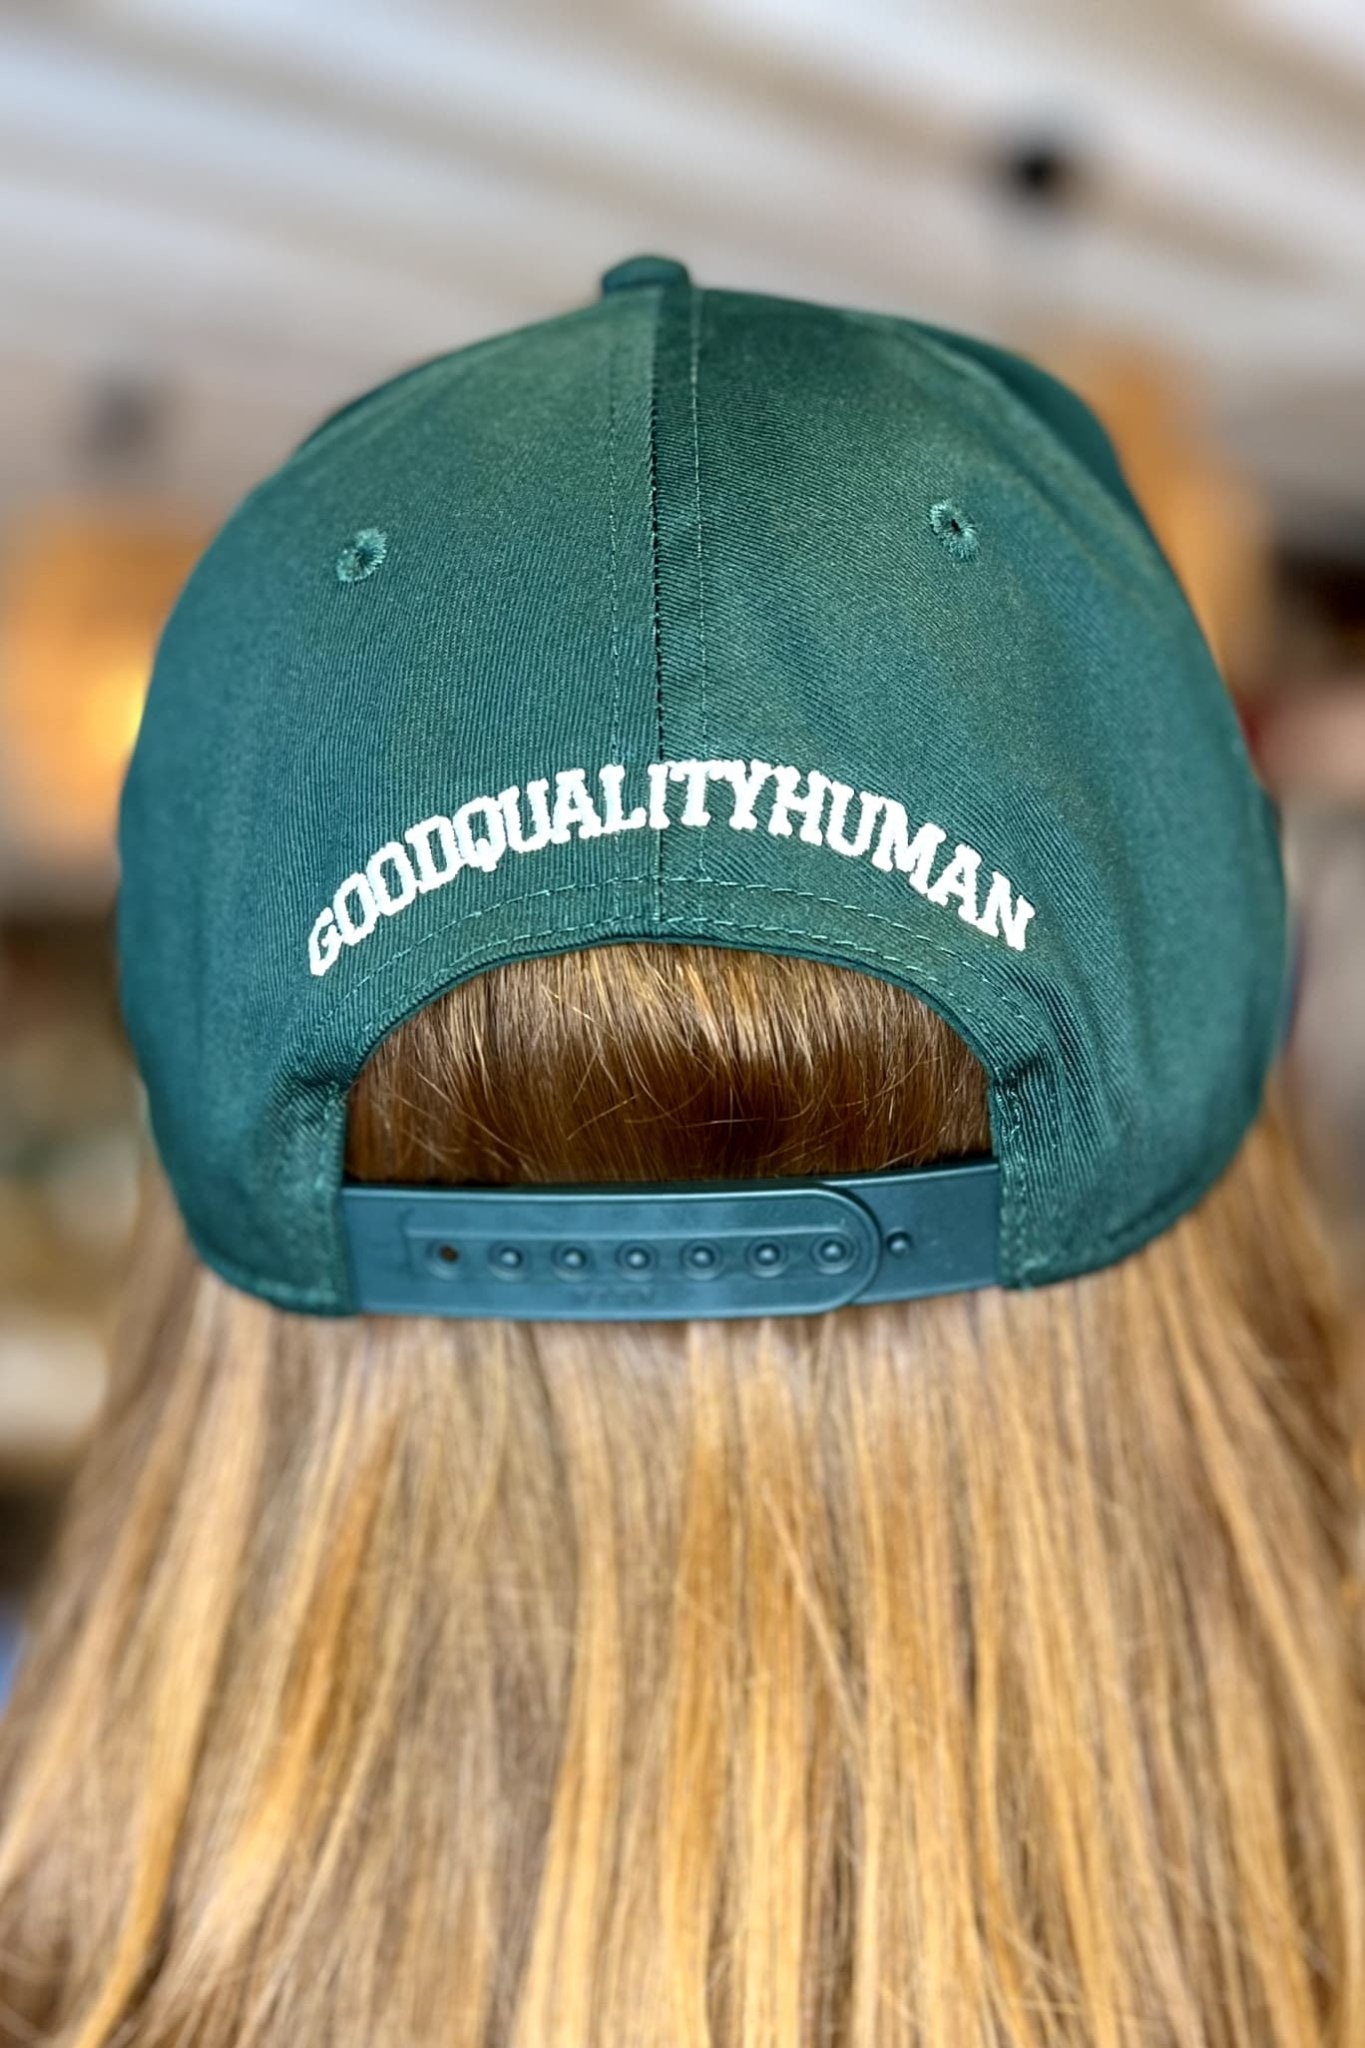 Los Angeles Rebel Baseball Cap (Green) - Hat